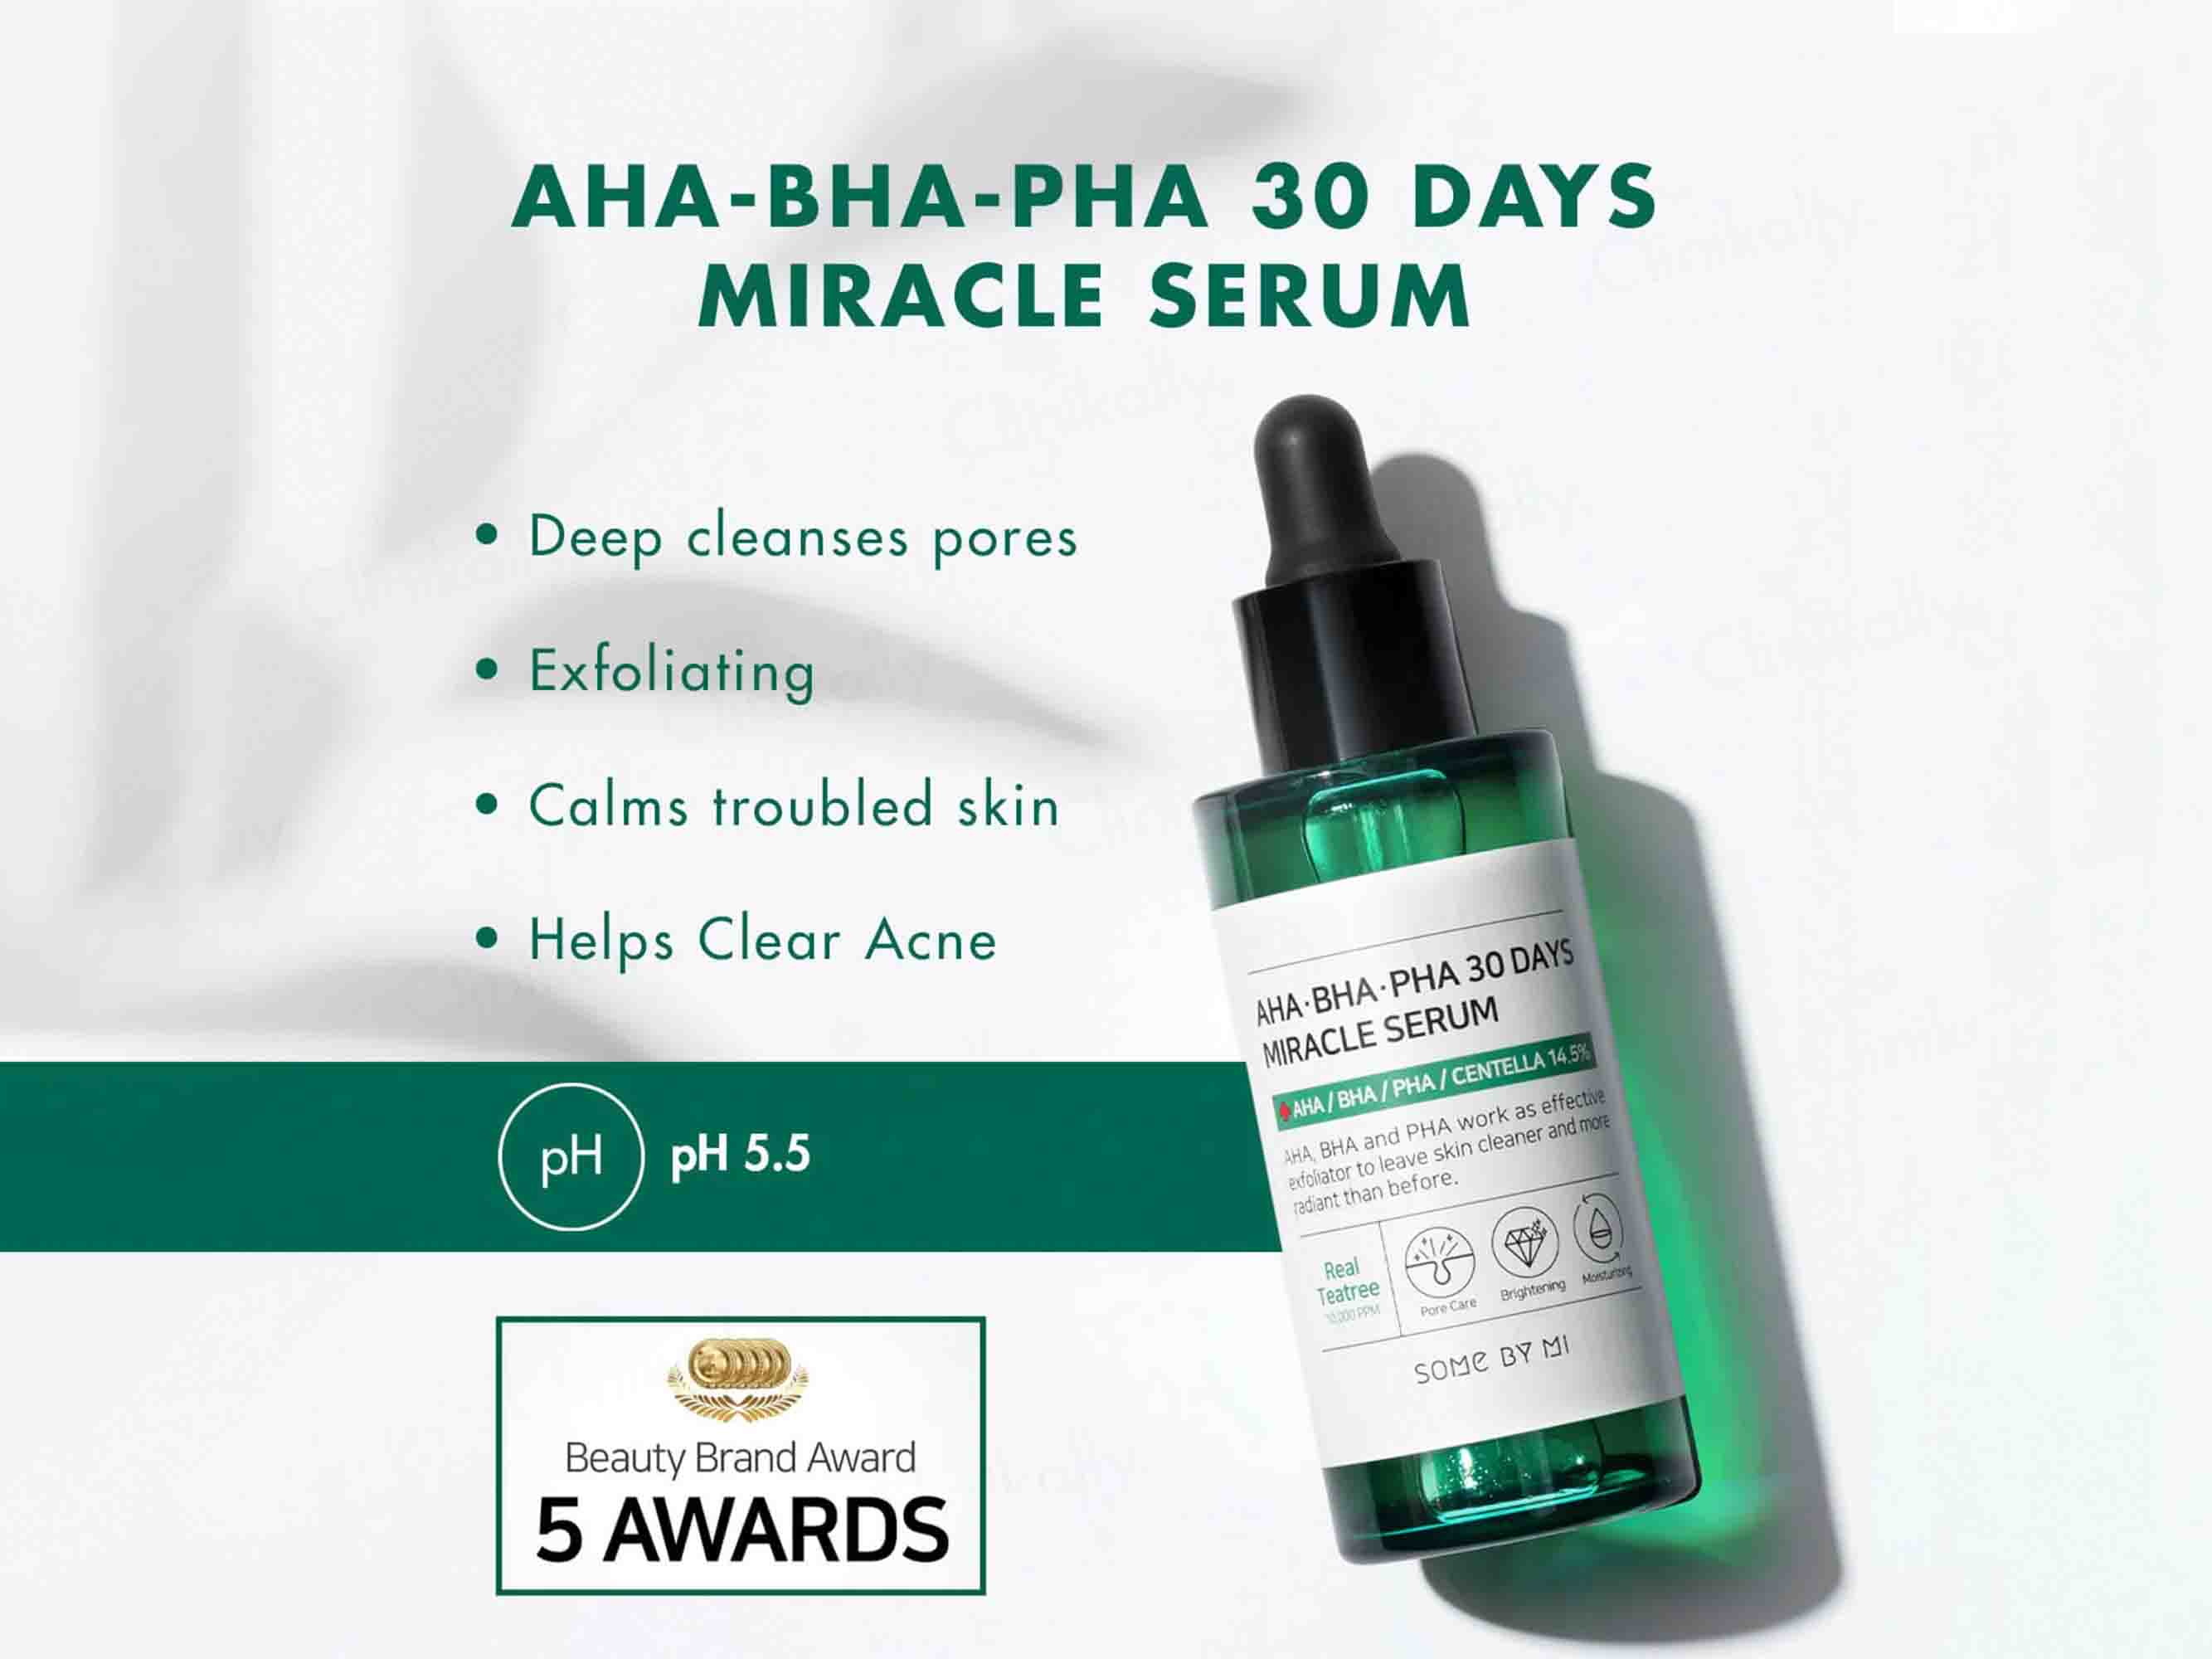 SOME BY MI AHA-BHA-PHA 30 Days Miracle Serum